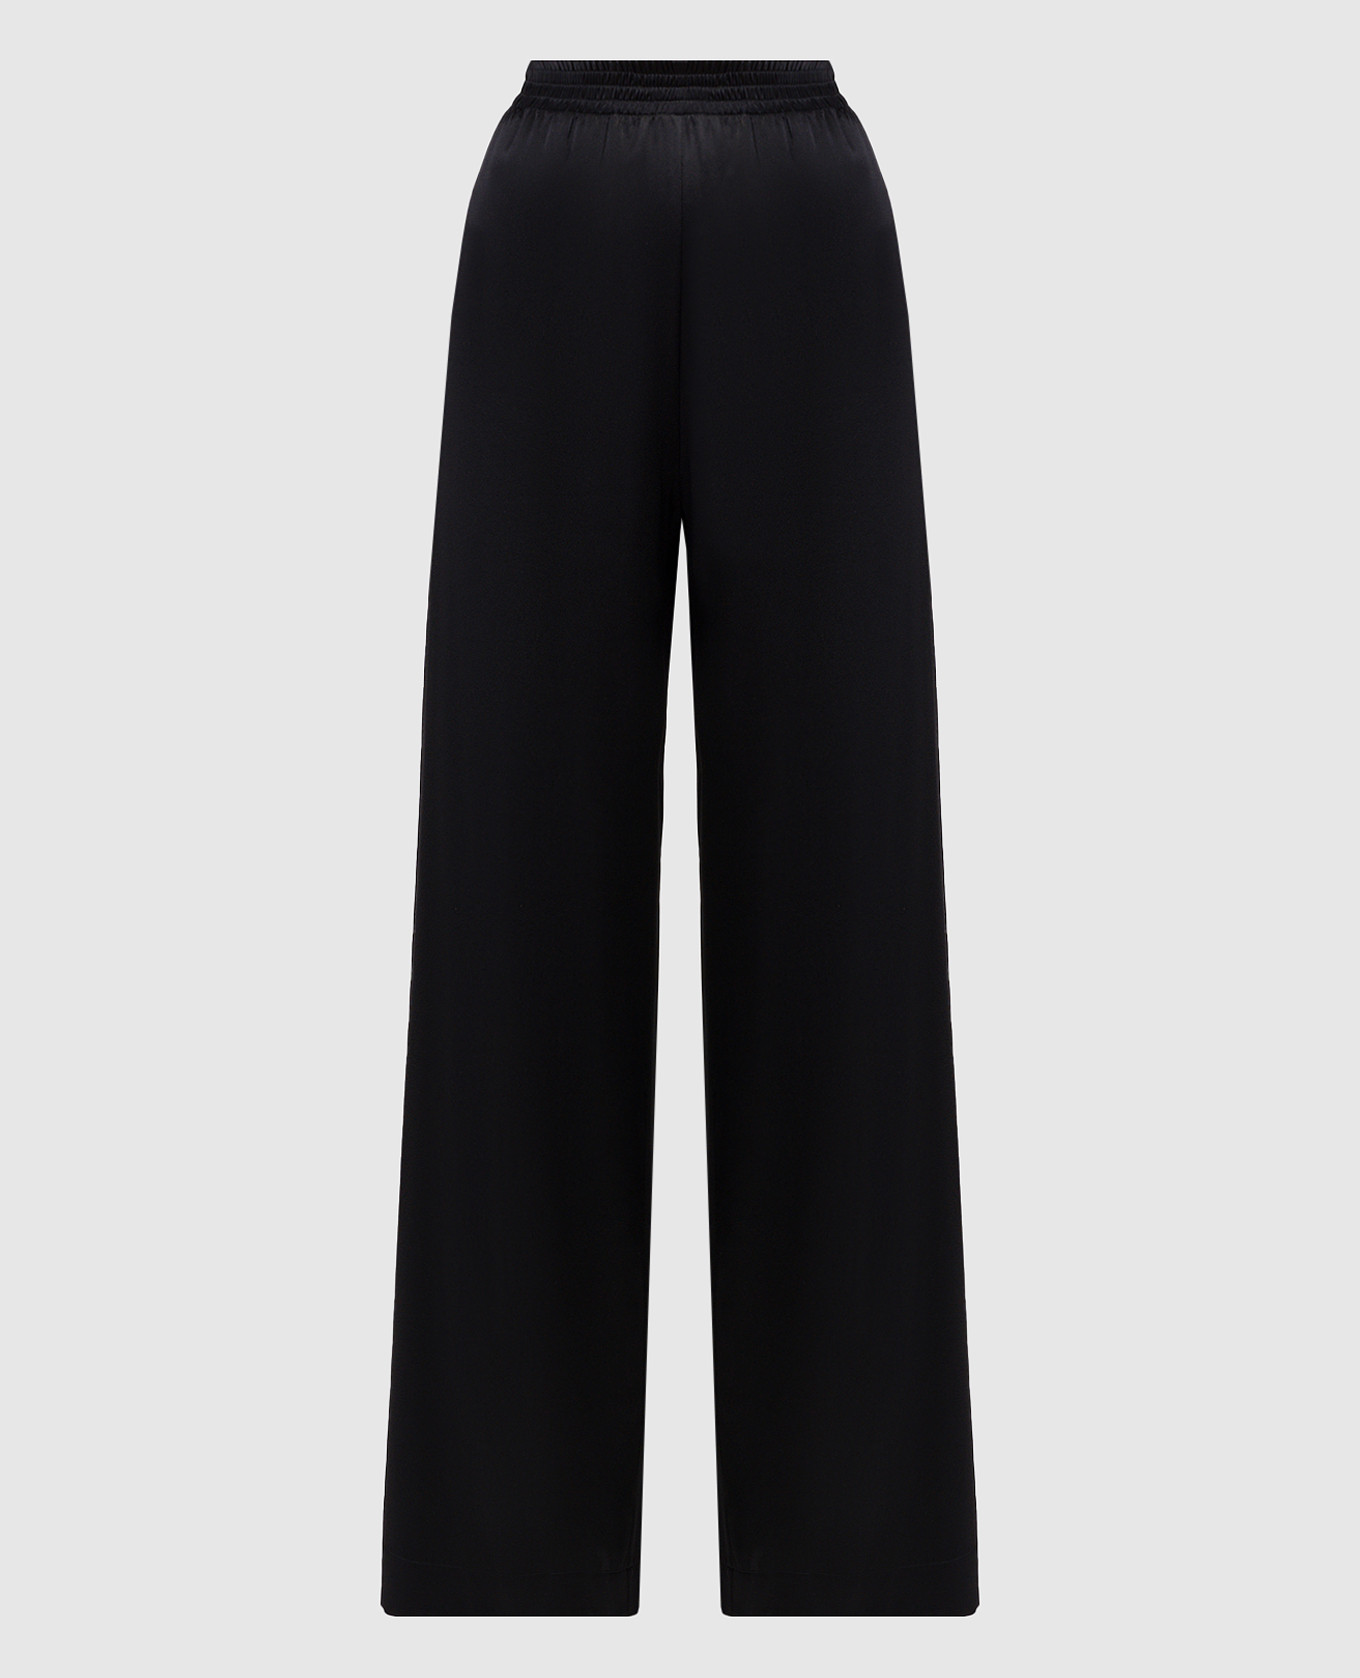 Black pants made of silk